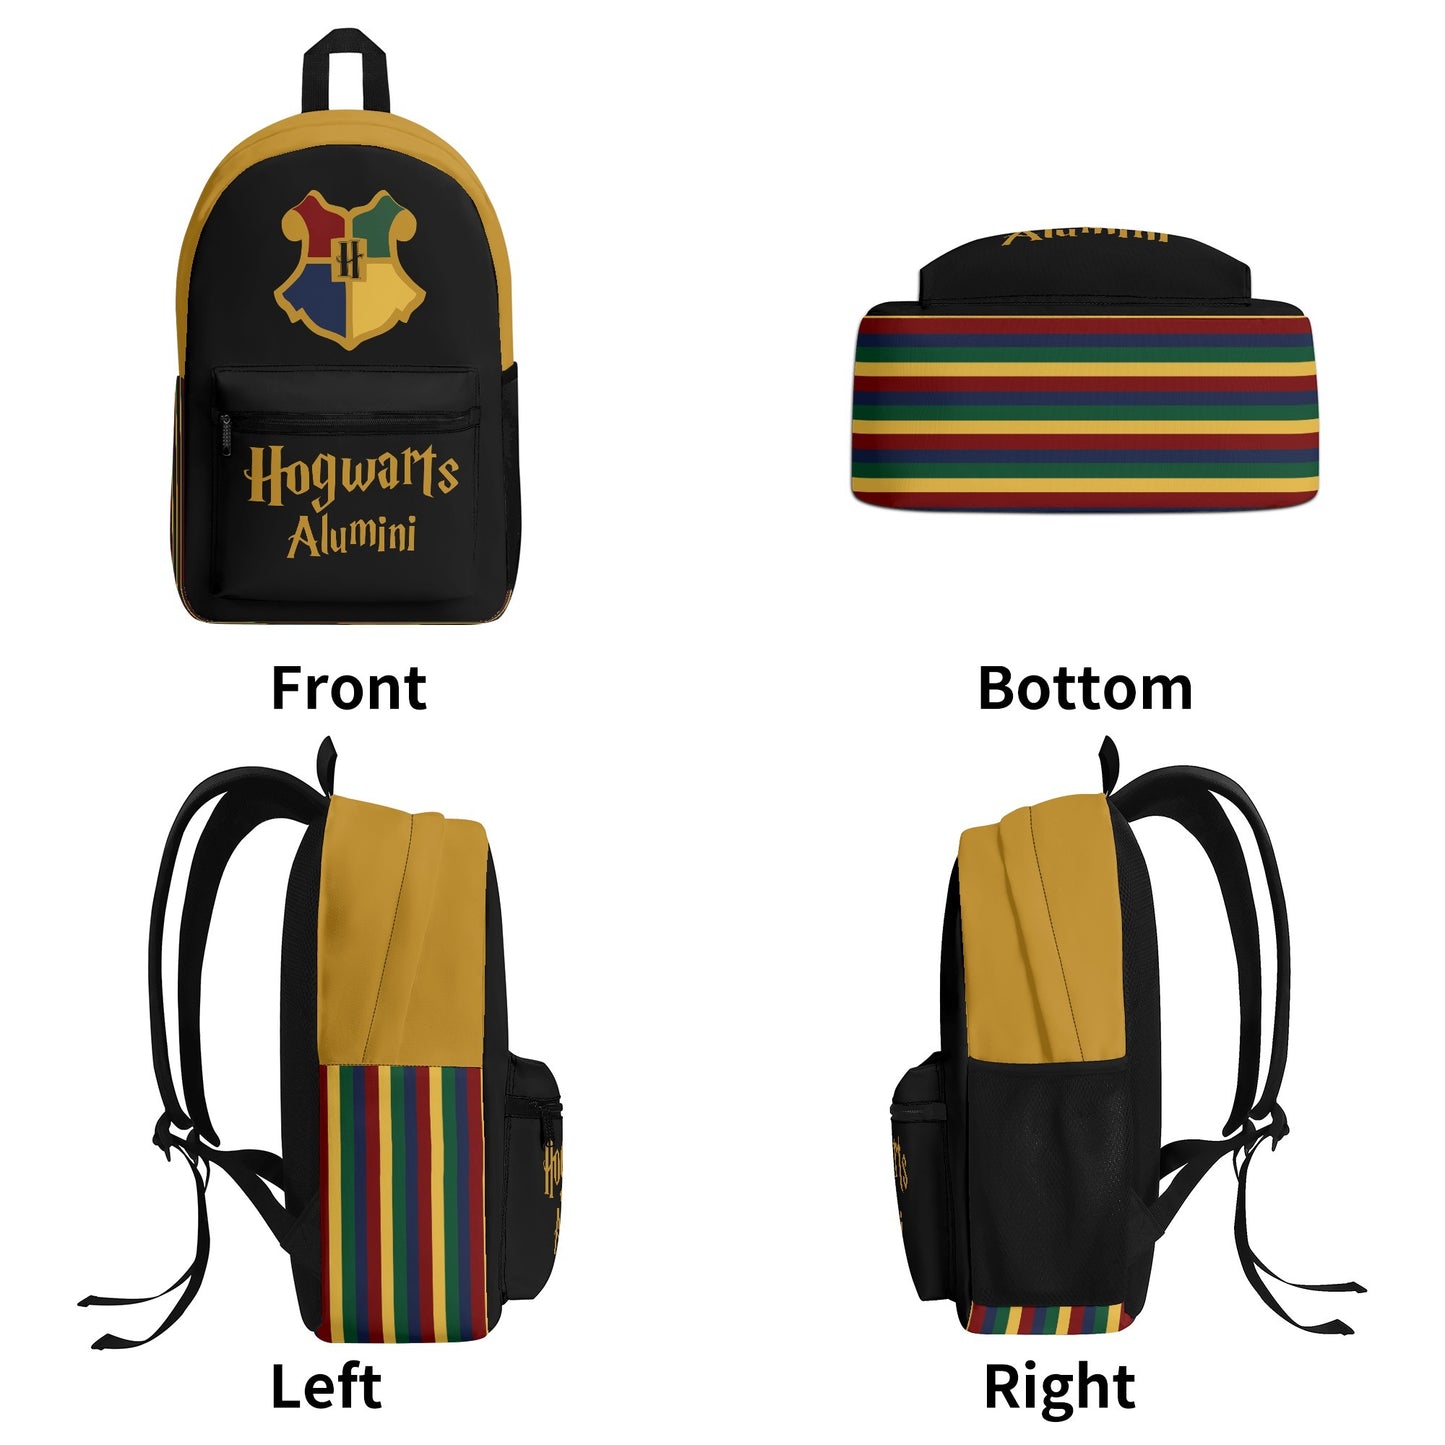 Hogwarts Aumini Vintage Backpack